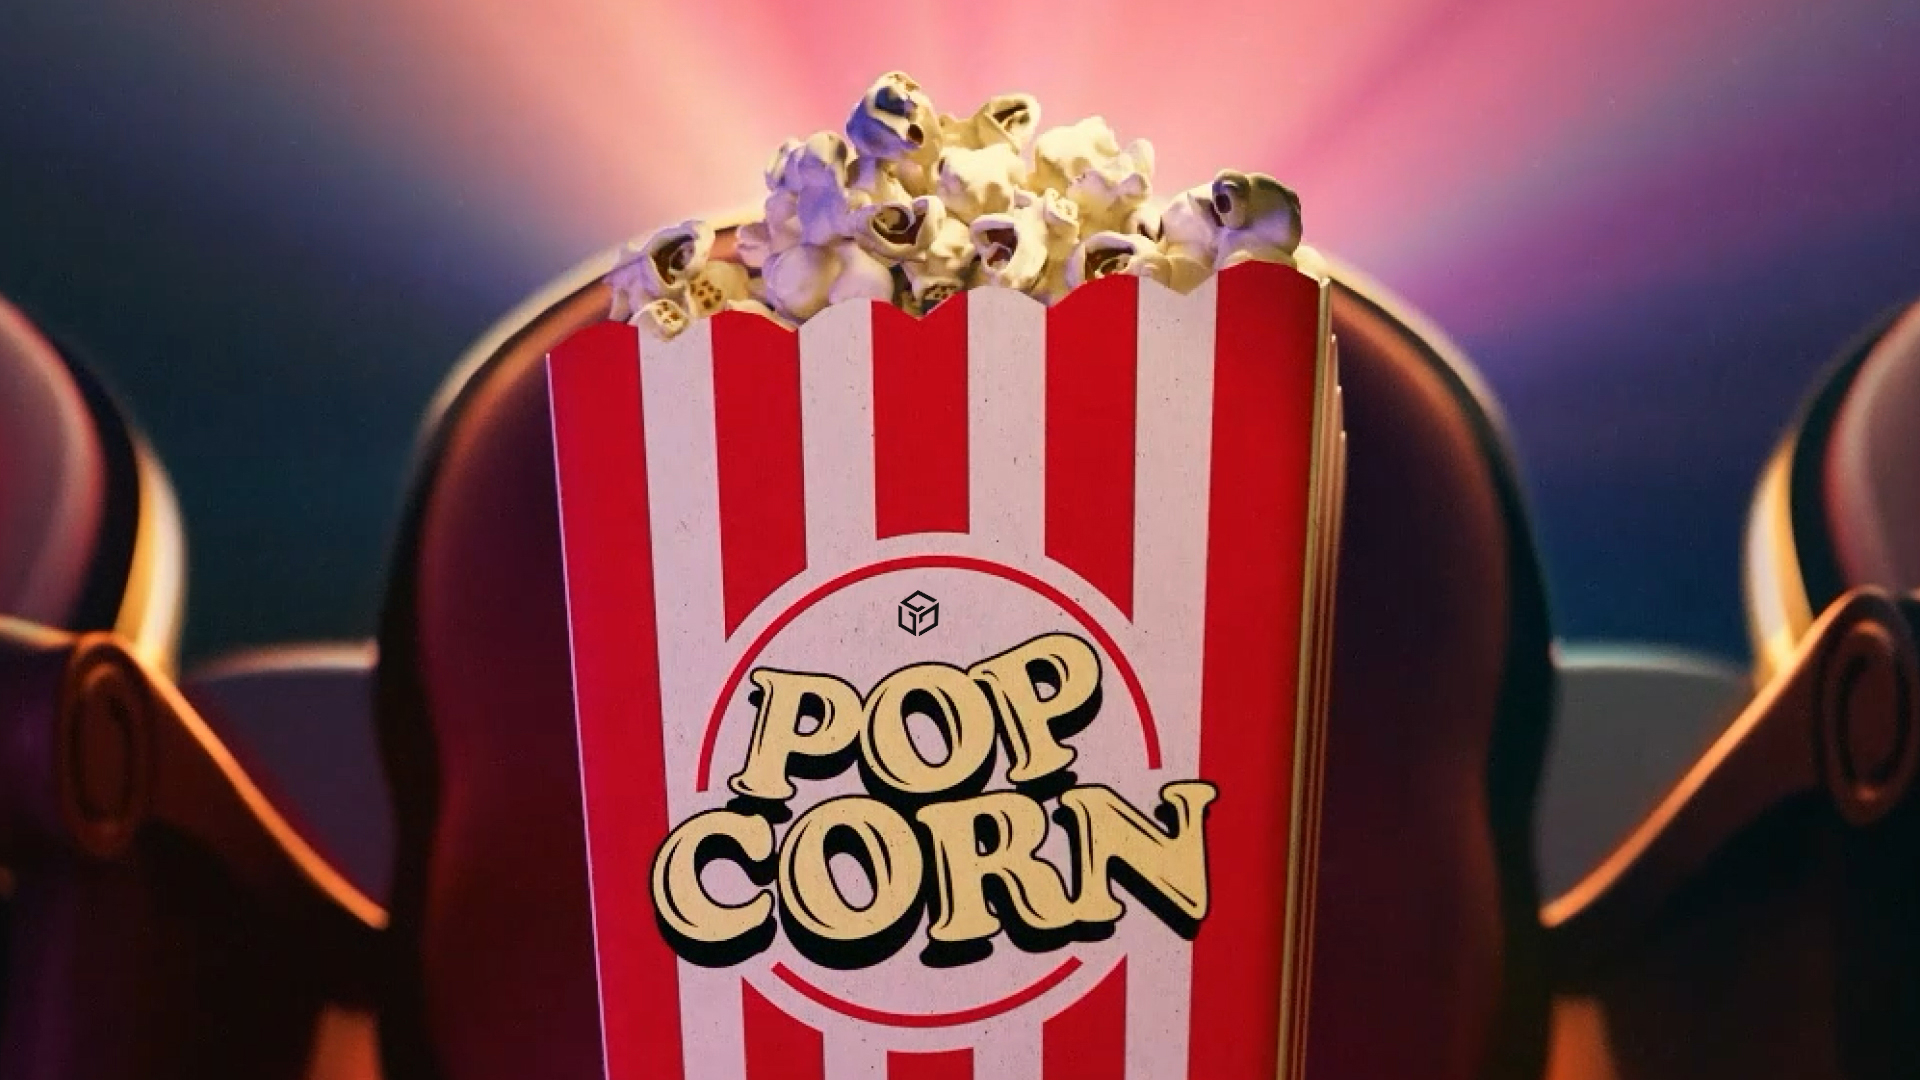 Gala Film platform rewards are live in the form of POPCORN!, the placeholder token for $FILM.